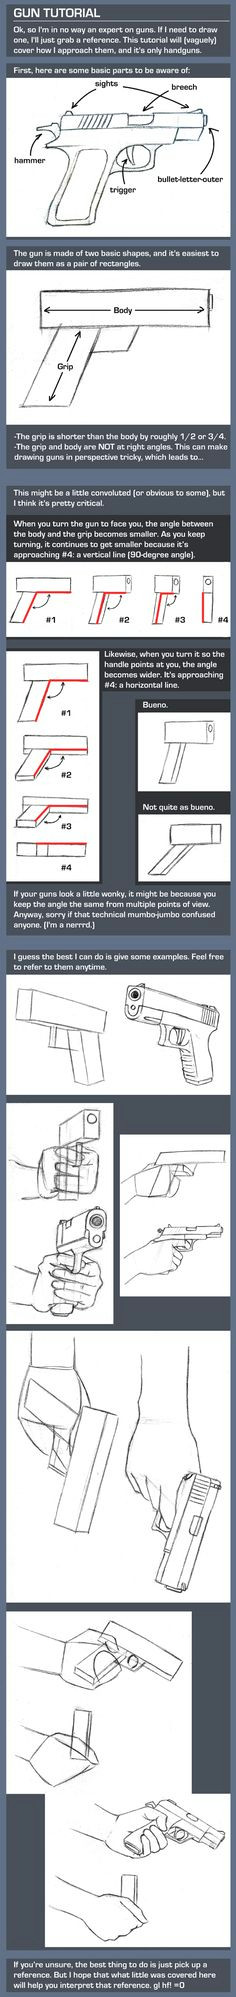 gun tutorial